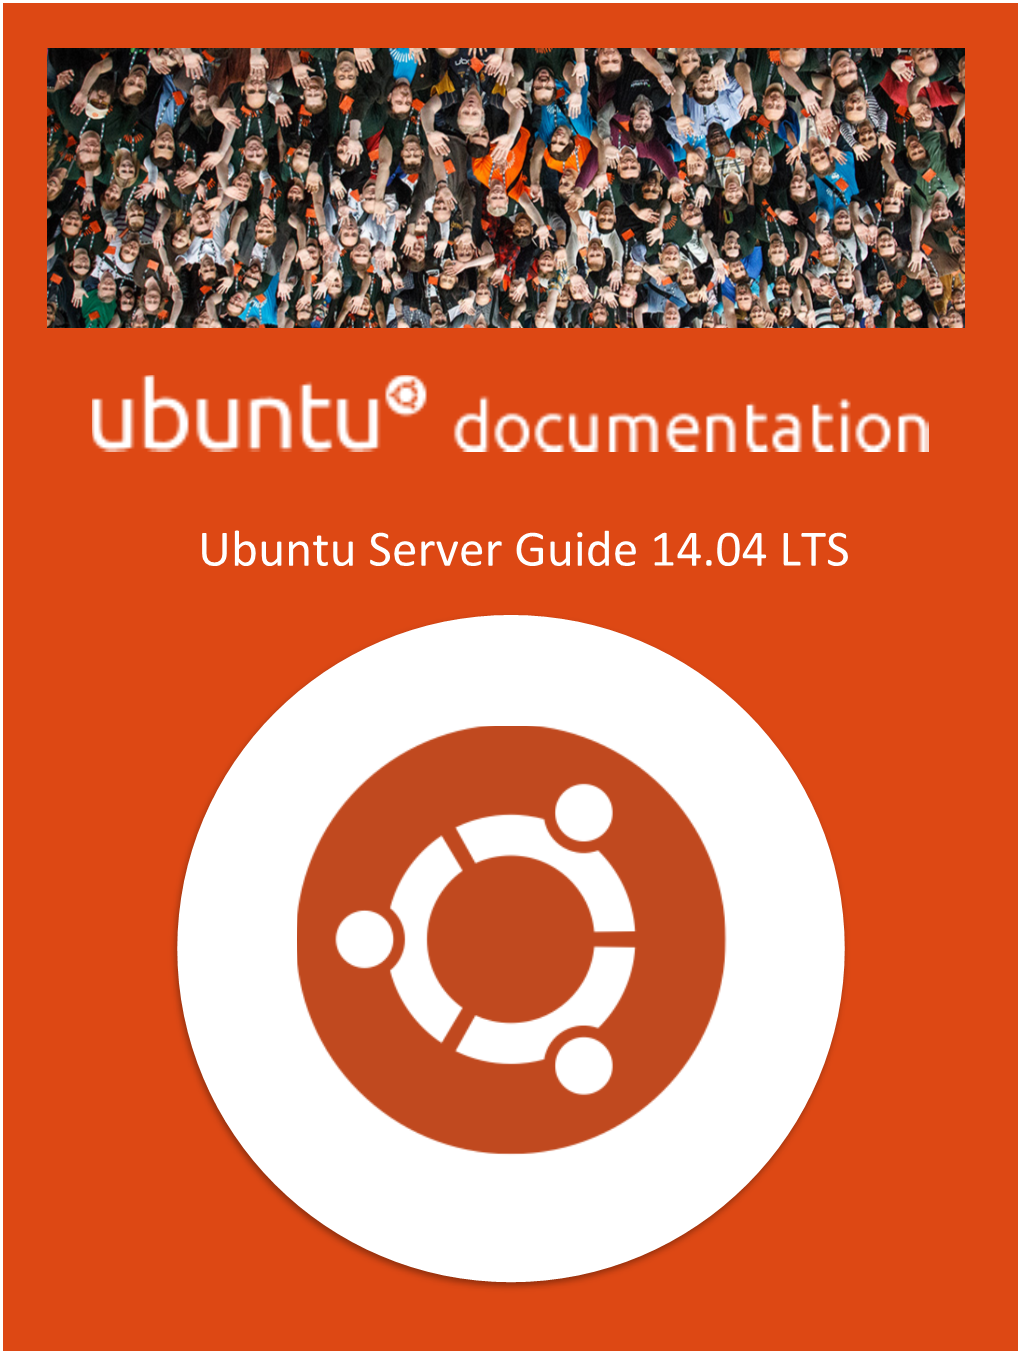 Ubuntu Server Guide Copyright © 2014 Contributors to the Document